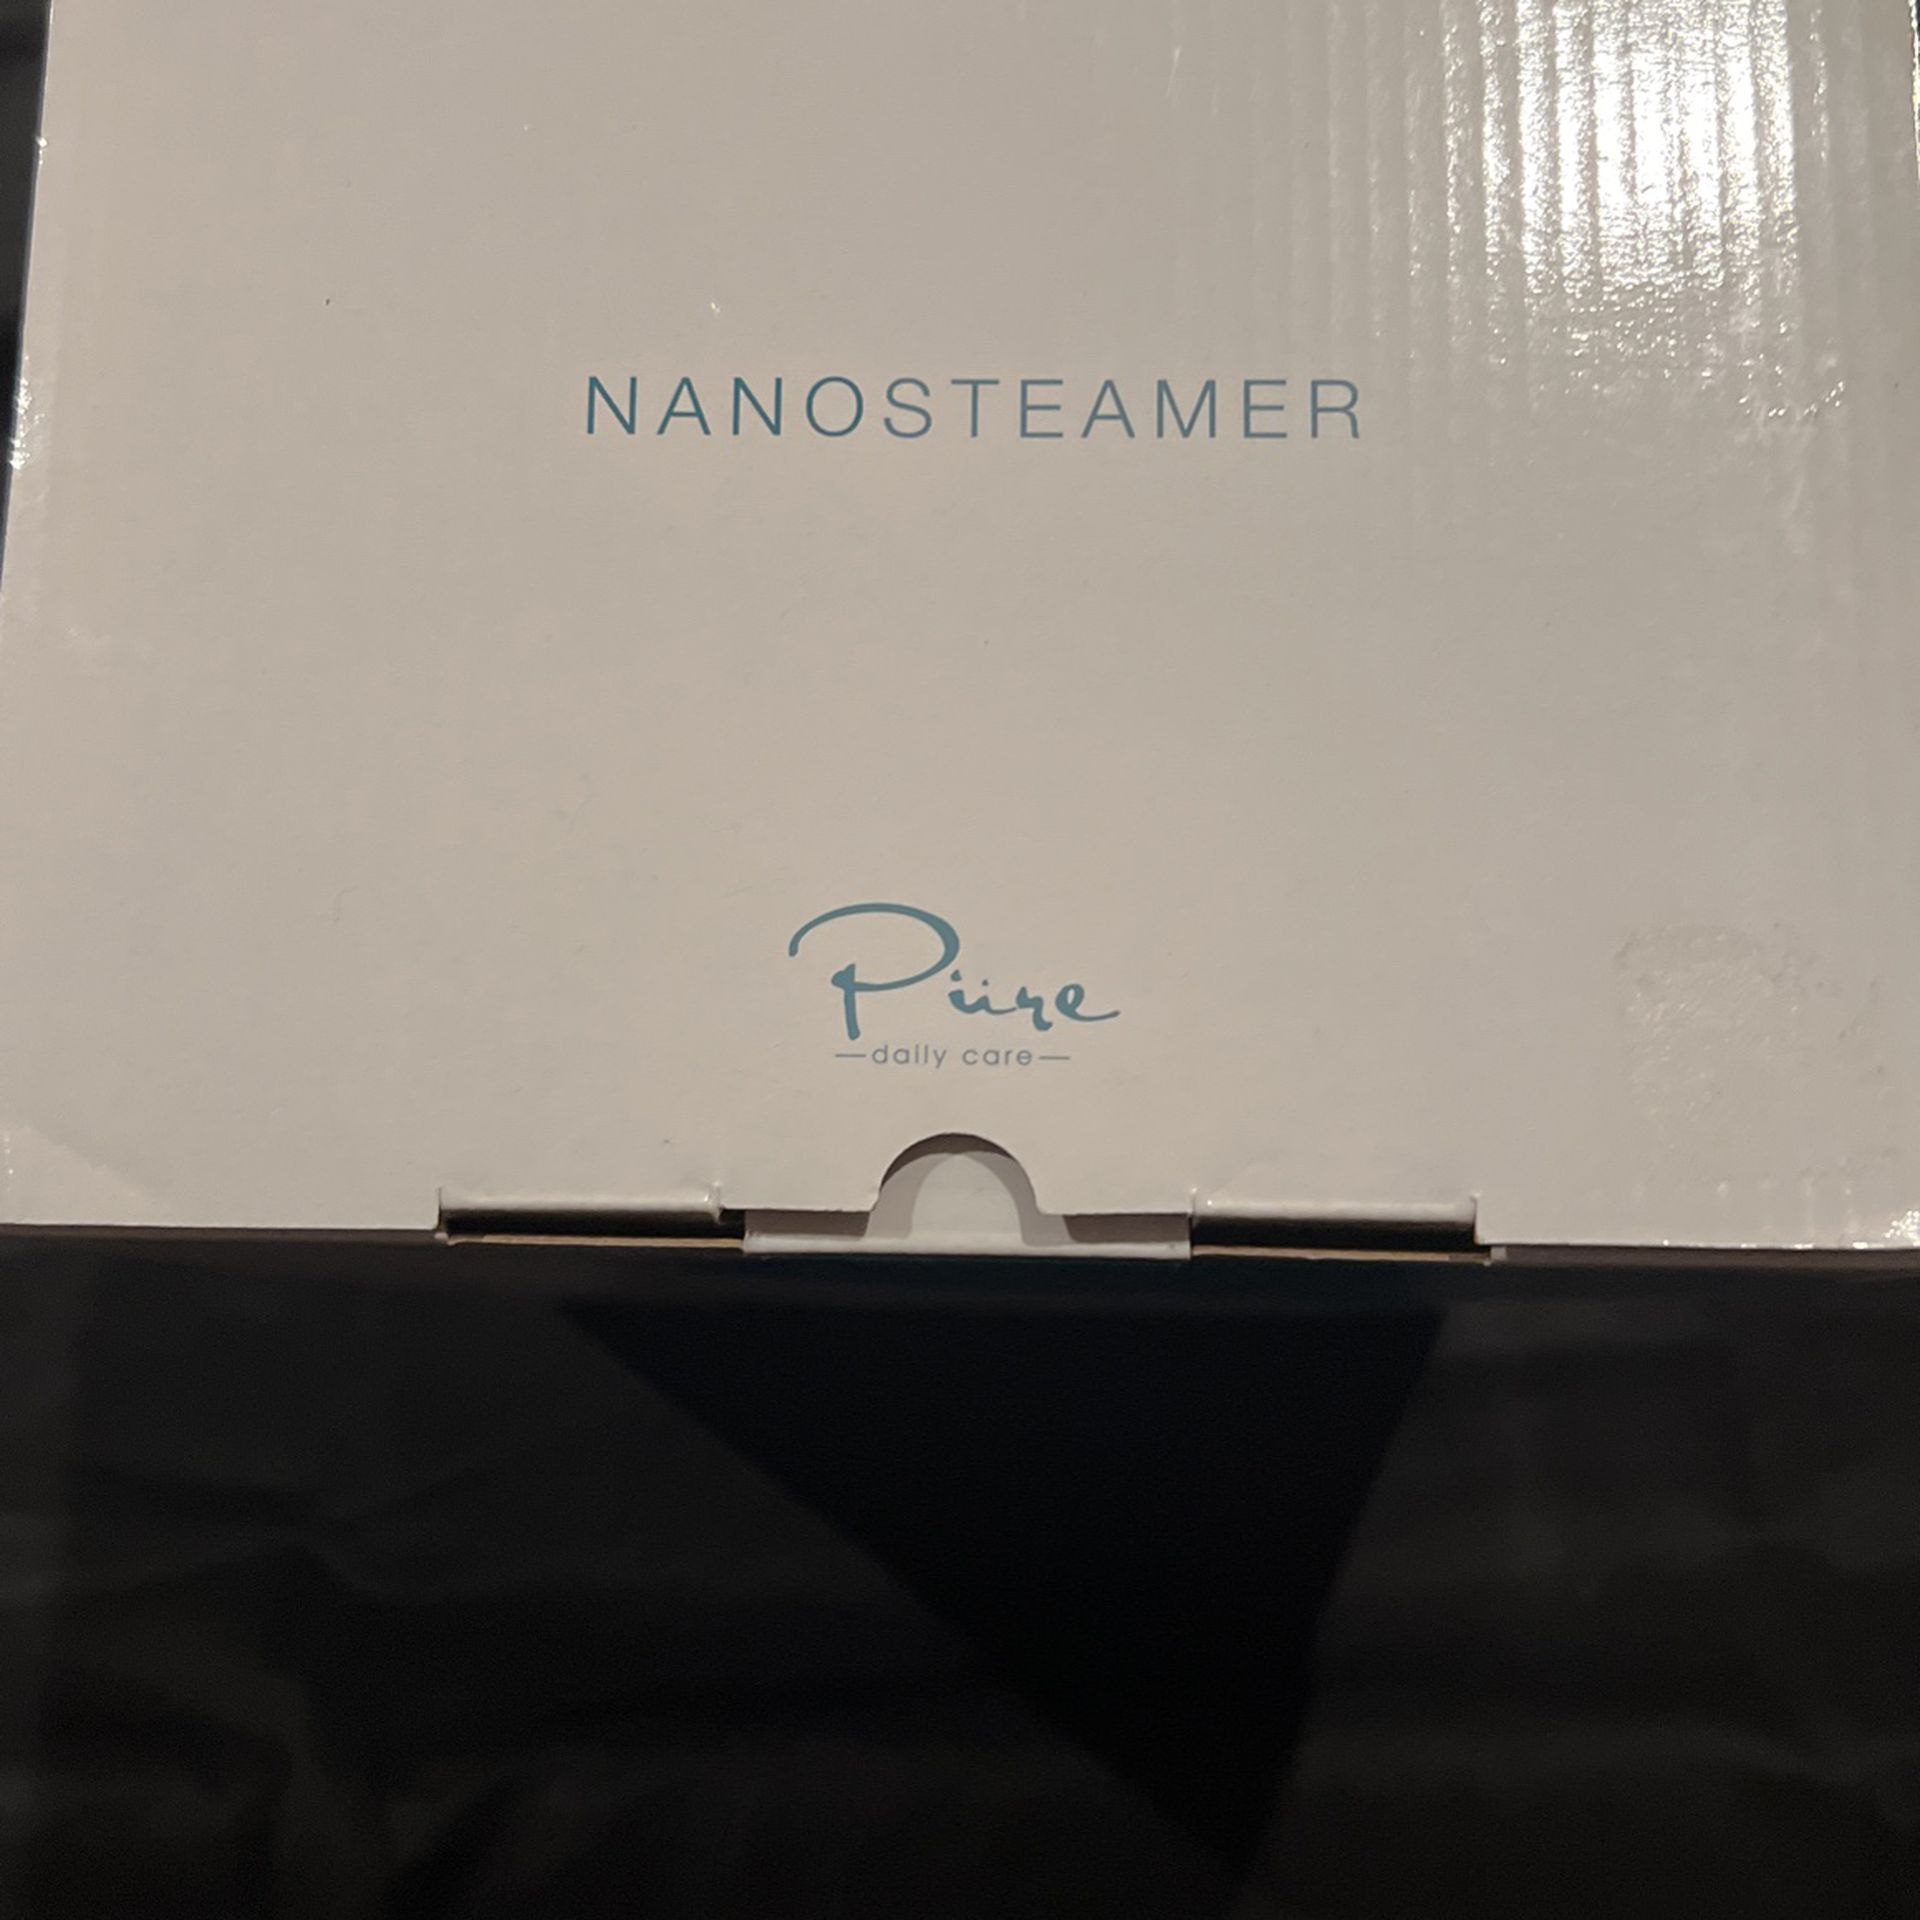 Nanosteamer By Pure